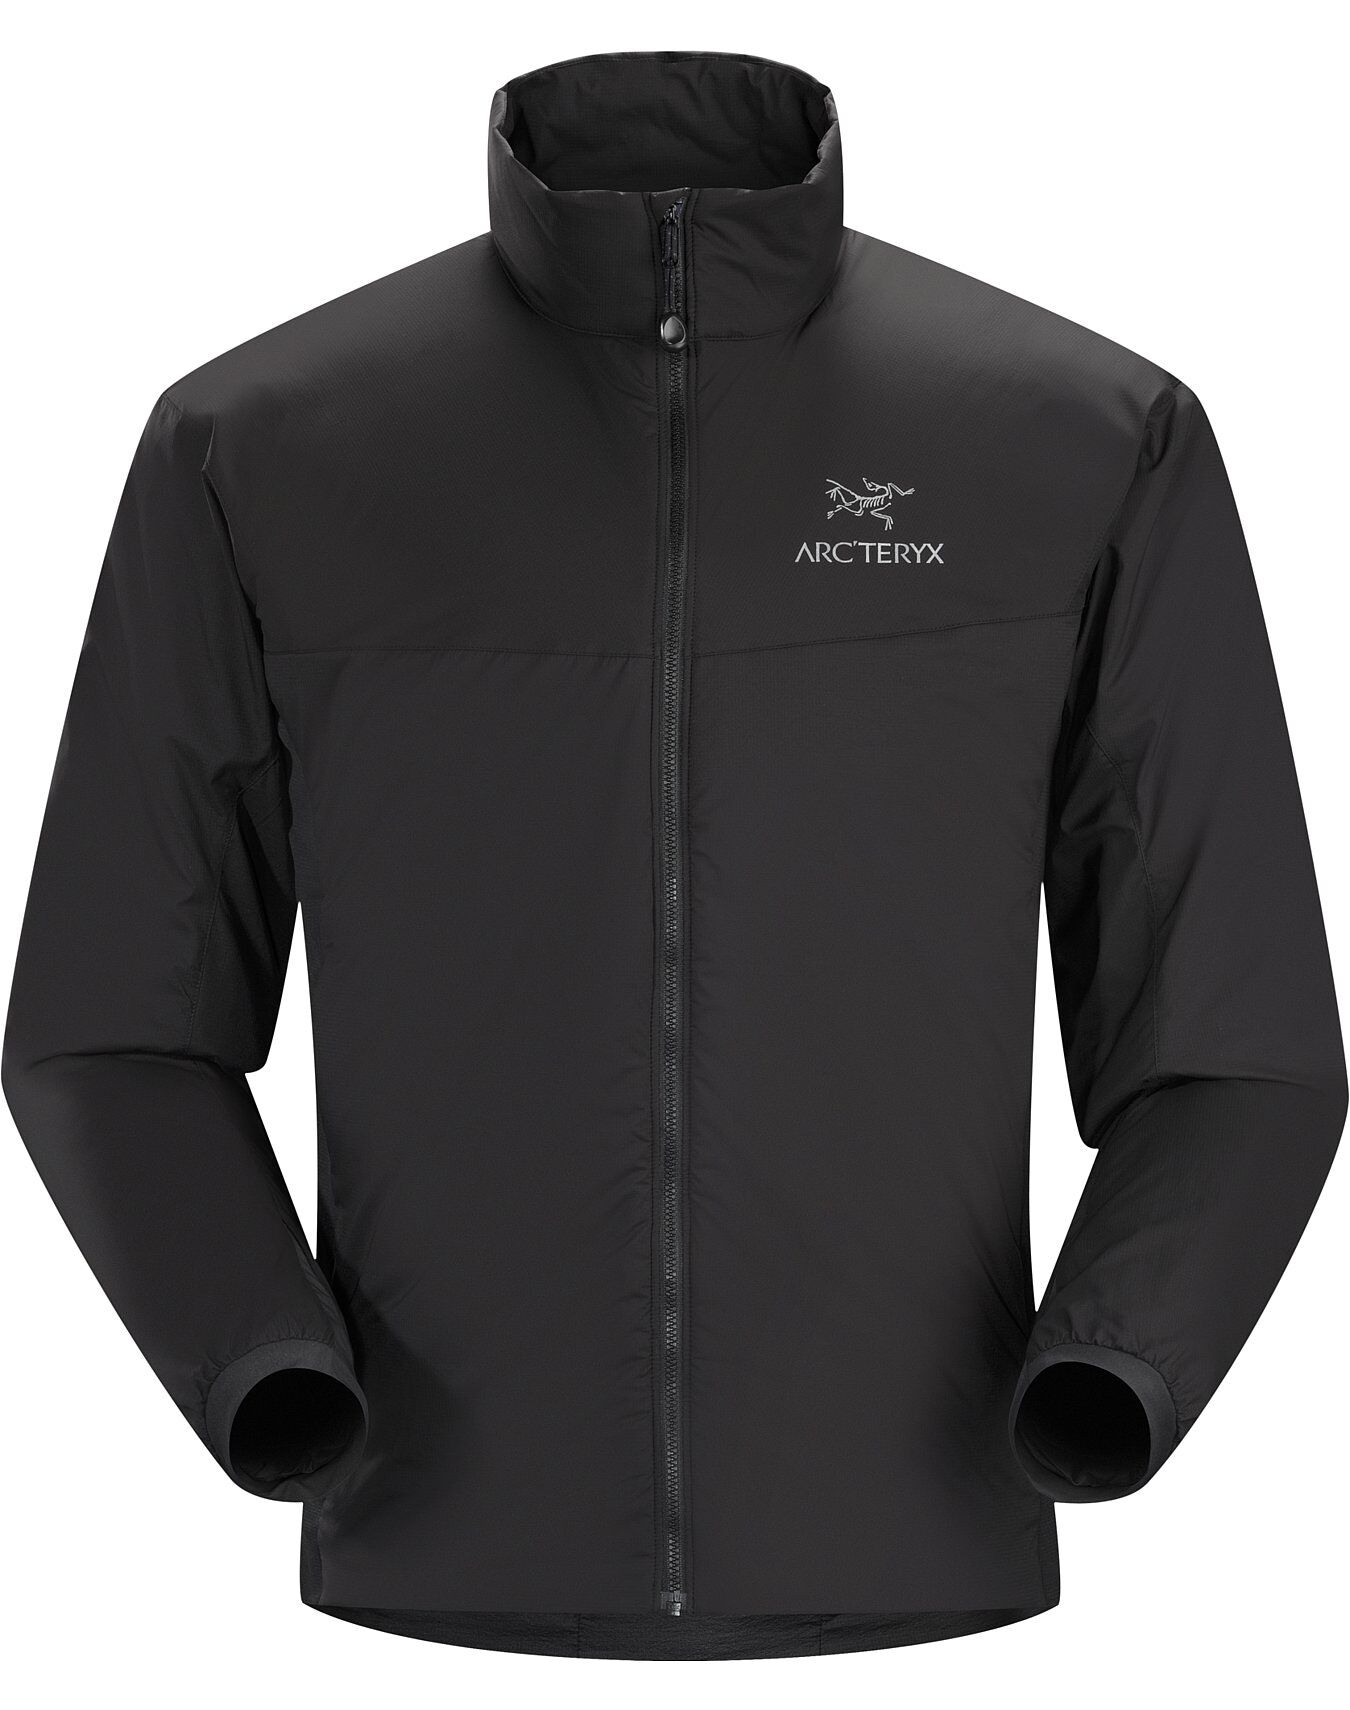 Arc'teryx Atom LT Jacket - Insulated jacket - Men's